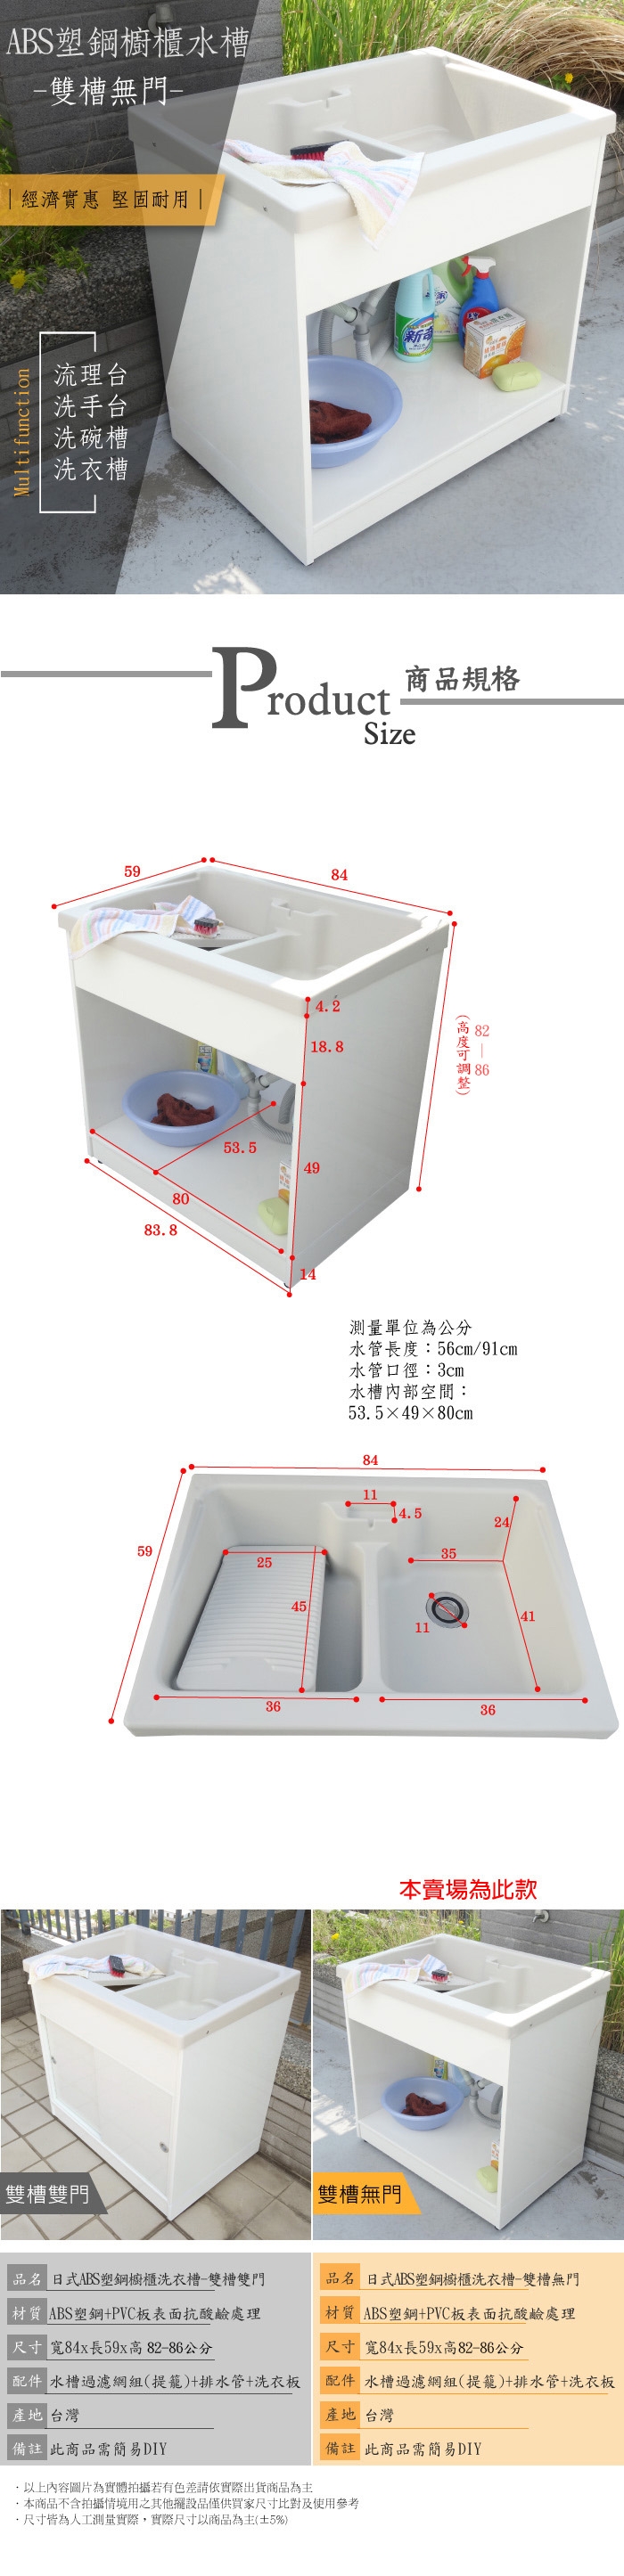 【Abis】雙11爆殺組~ABS櫥櫃雙槽式無門洗衣槽1組 +中型塑鋼洗衣槽1組